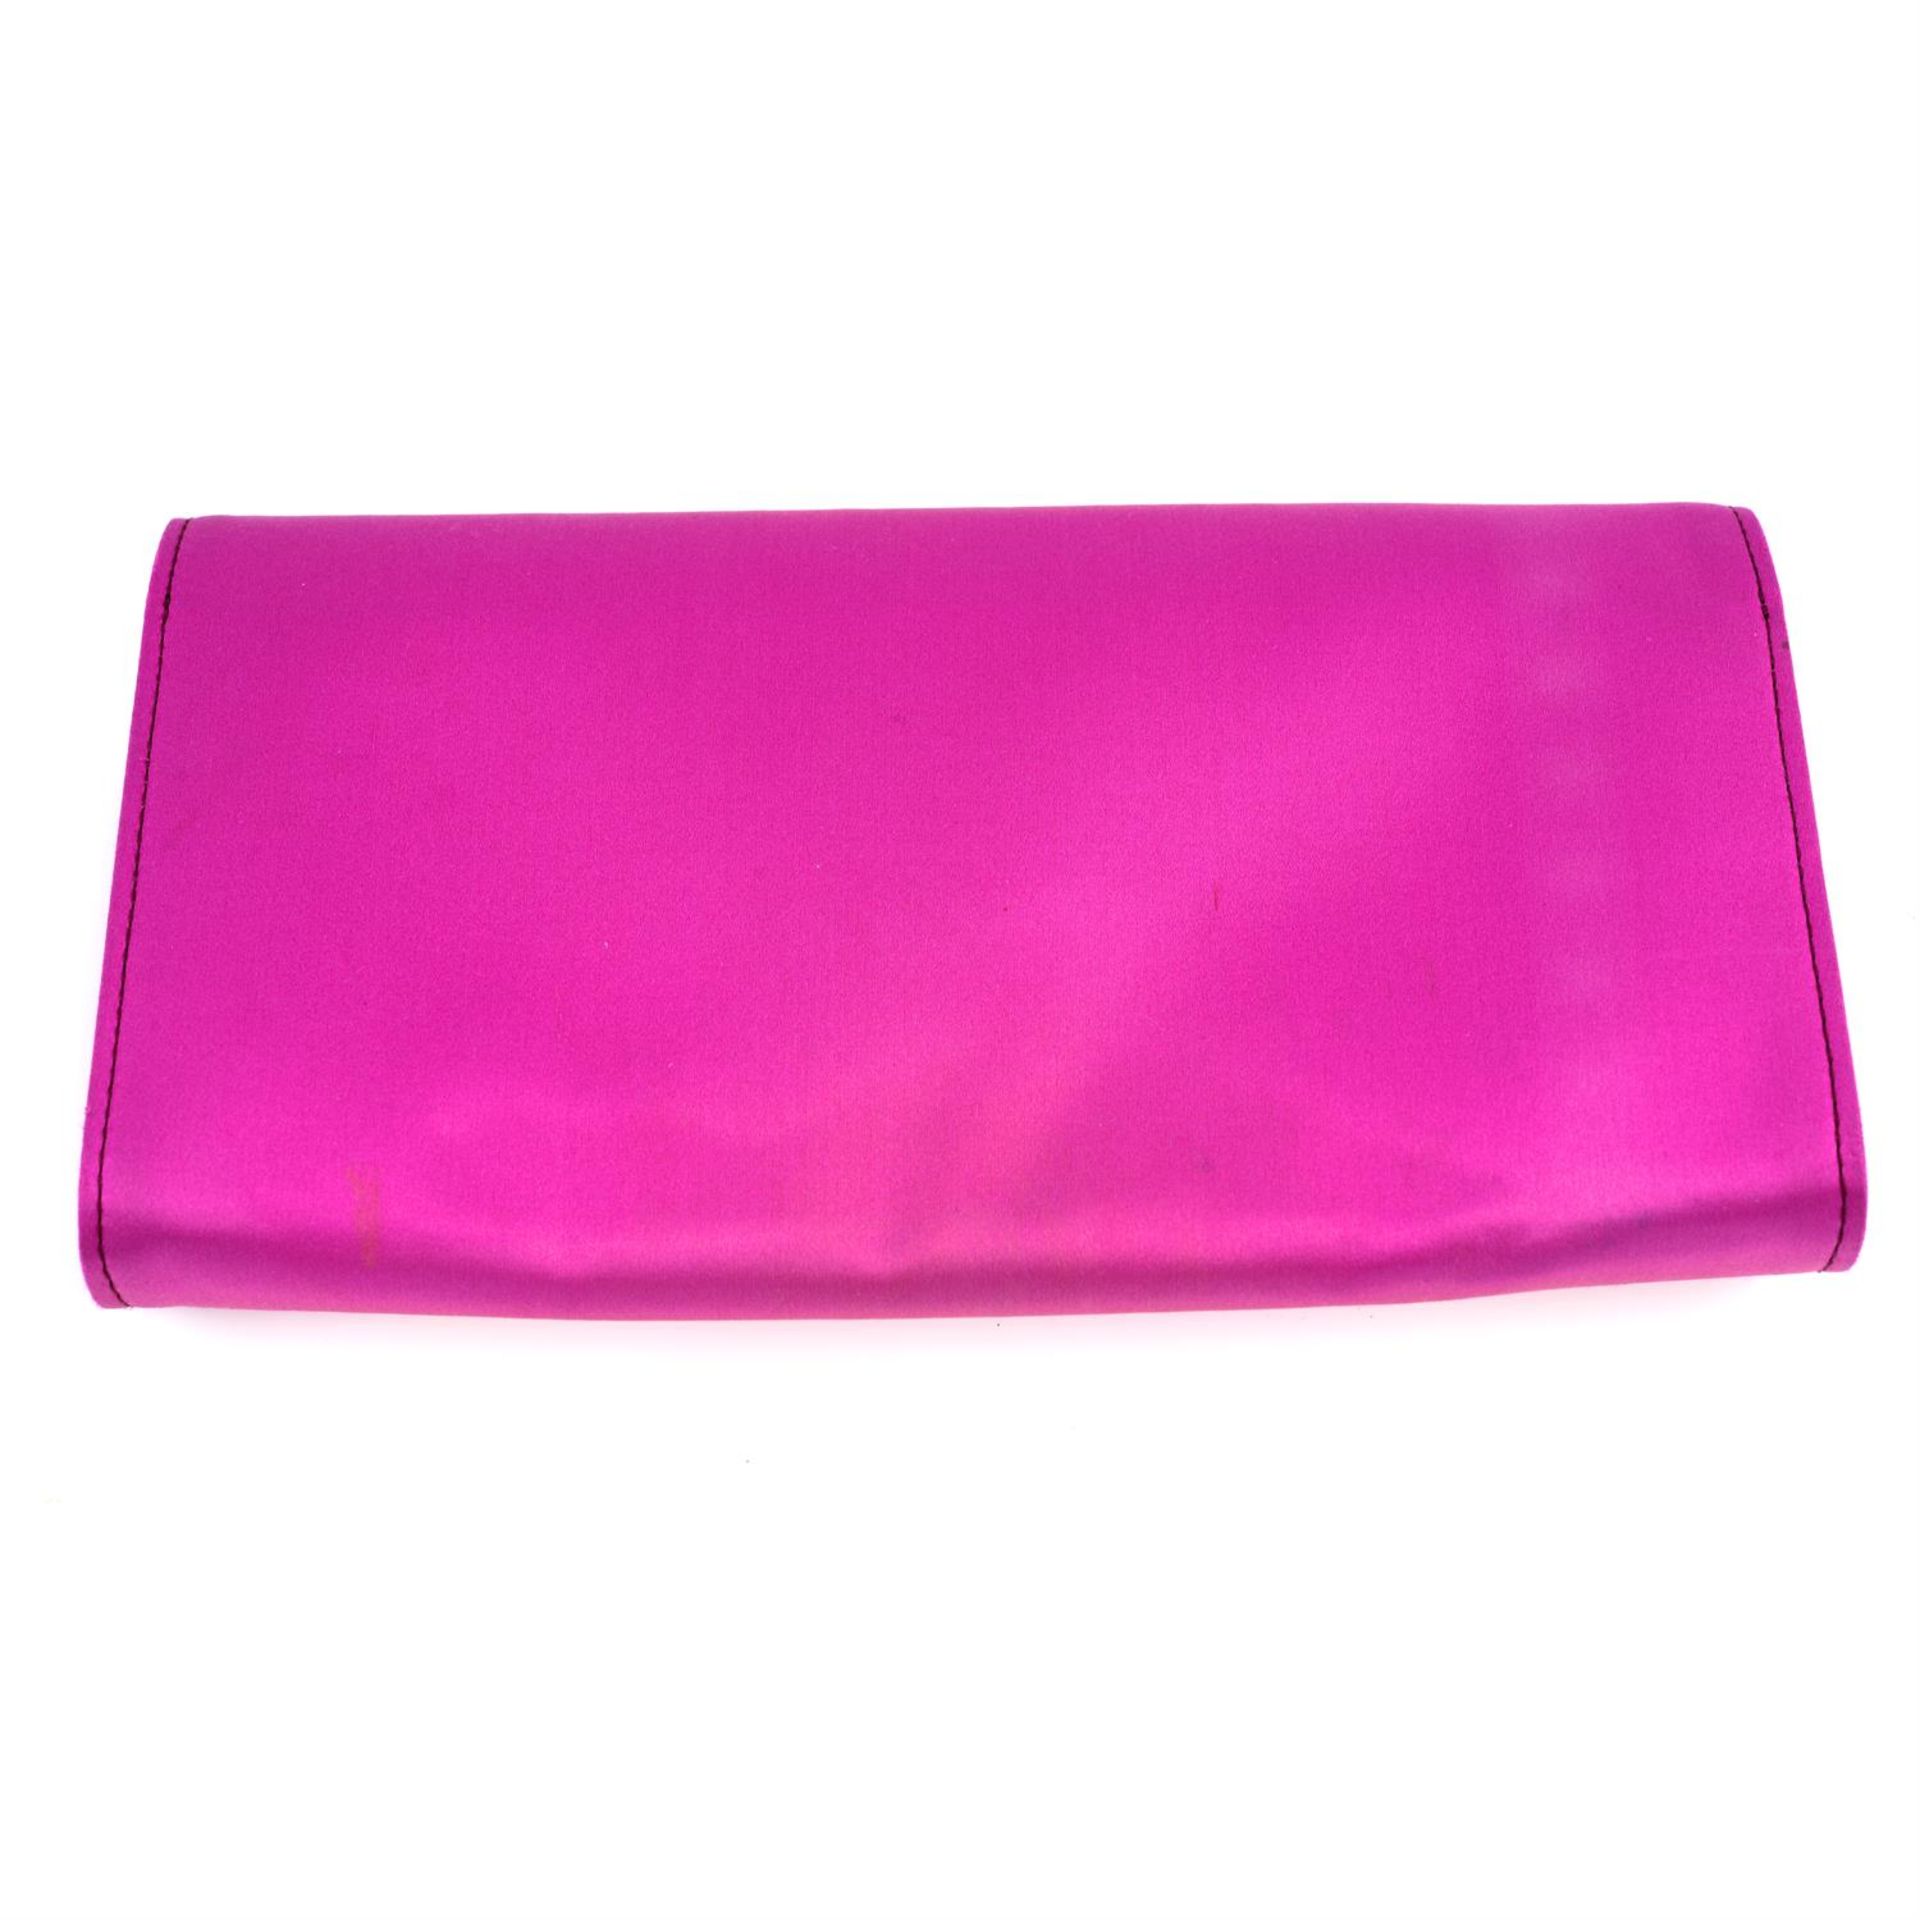 ALEXANDER MCQUEEN - a pink satin clutch bag. - Image 2 of 4